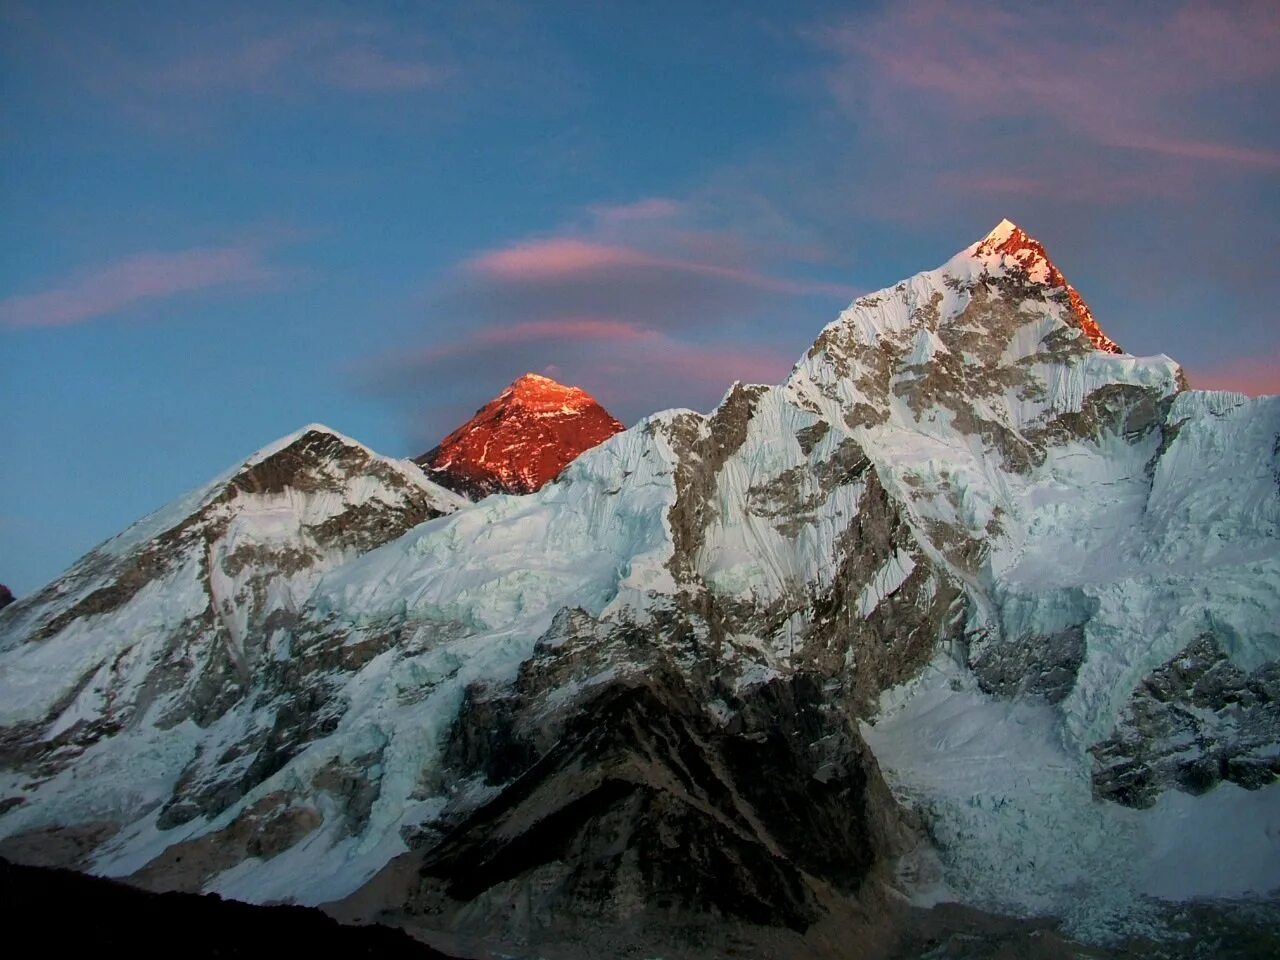 Гималаи Эверест Джомолунгма. Гора Эверест (Джомолунгма). Гималаи. Вершины: гора Джомолунгма (Эверест),. «Сагарматха» = Эверест = Джомолунгма). Высота вершины гималаи